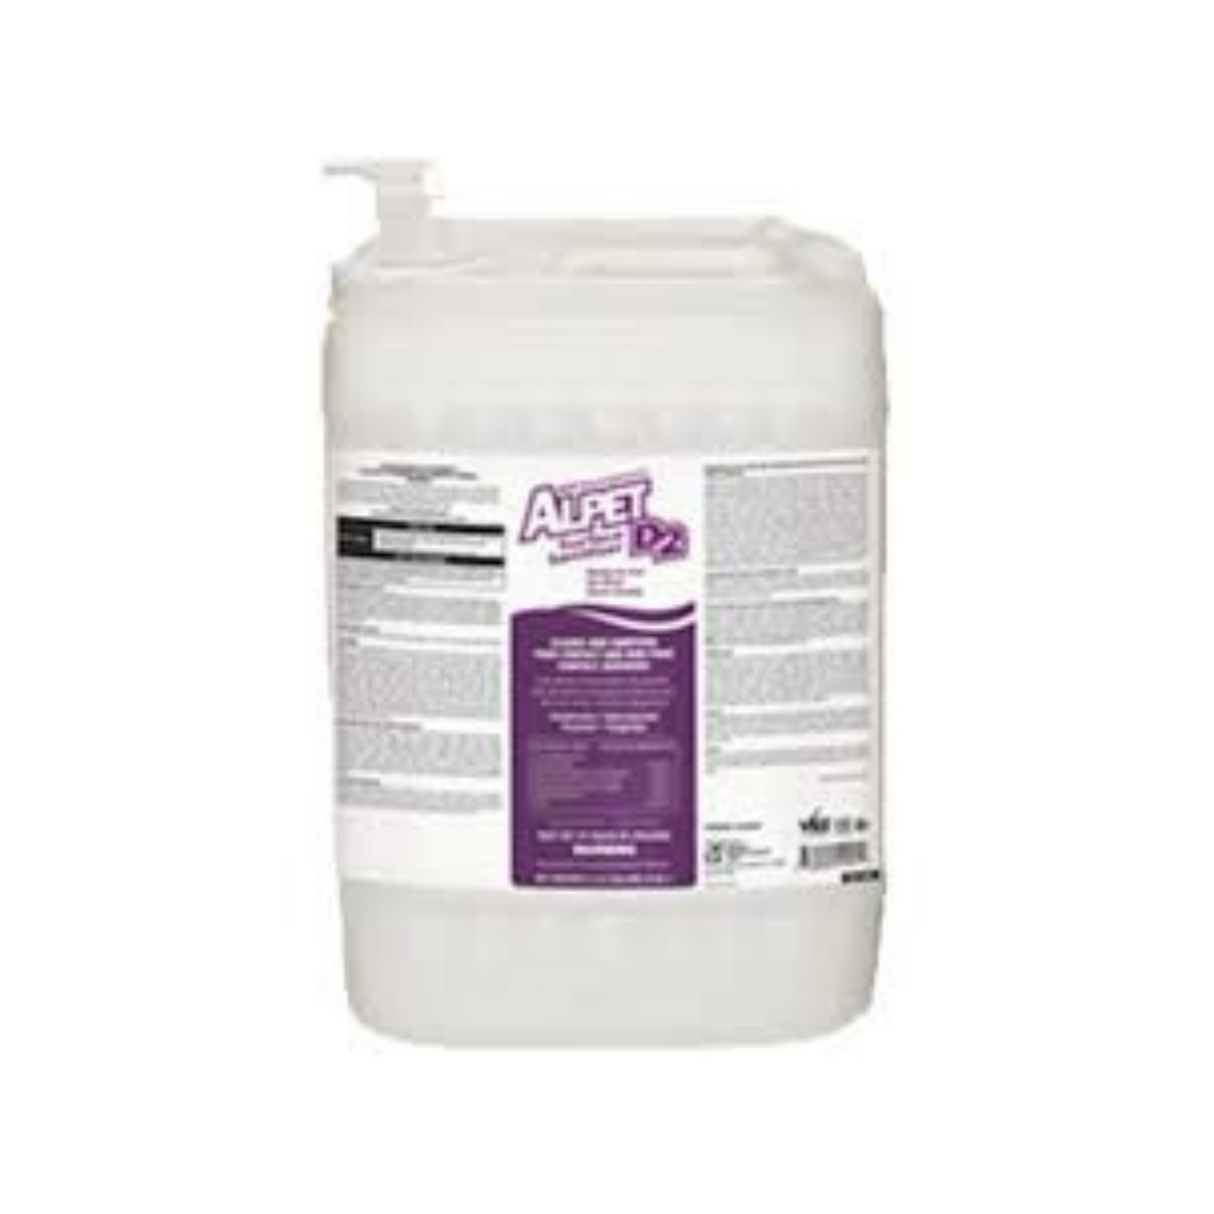 Alpet D2 Surface Sanitizer. 5 gallon pail. NSF Listed, EPA Registered, Kosher, Pareve and Halal